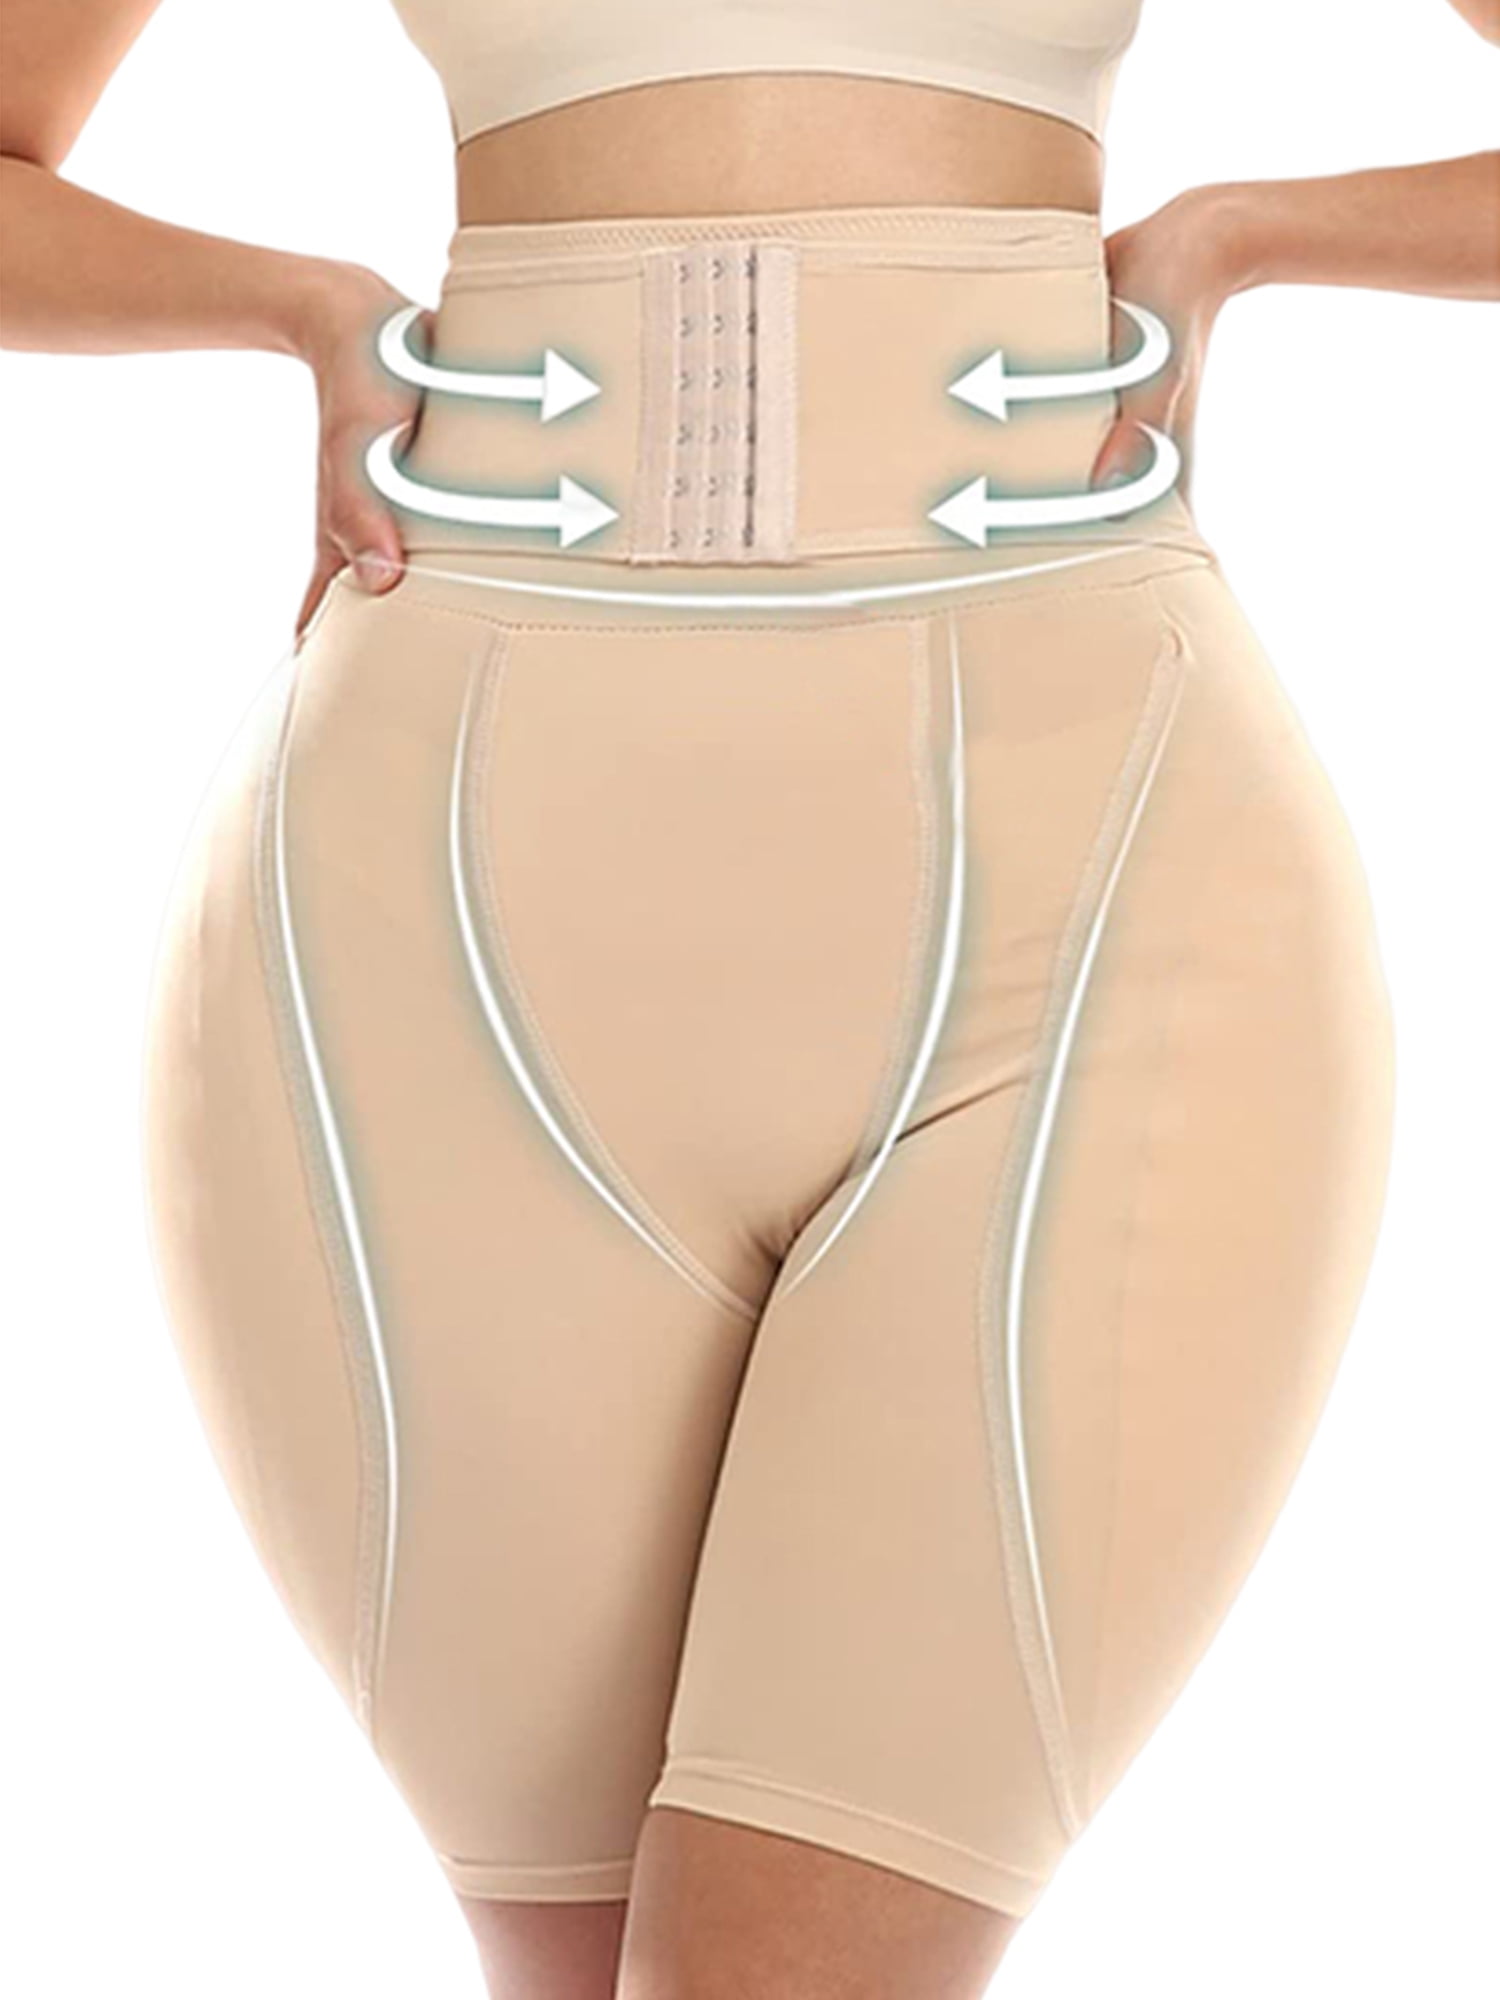 JustVH Women Girdle Body Shaper Tummy Control Removable Butt Pads Skinny  Cincher Shapewear 